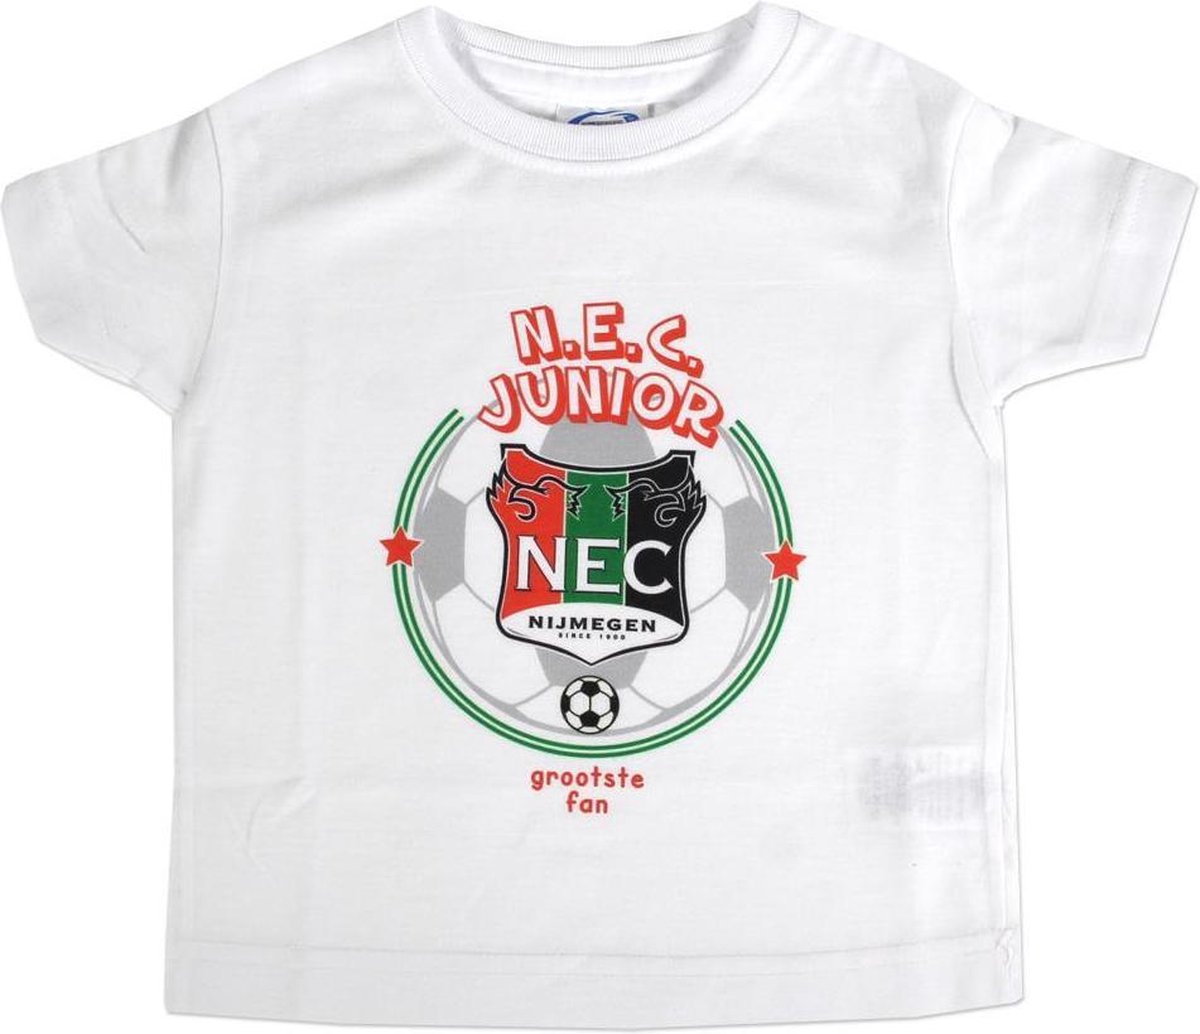 Ontwarren Matig Herhaald Baby T-shirt fan N.E.C. Nijmegen-Maat-92-Kleur-Wit | bol